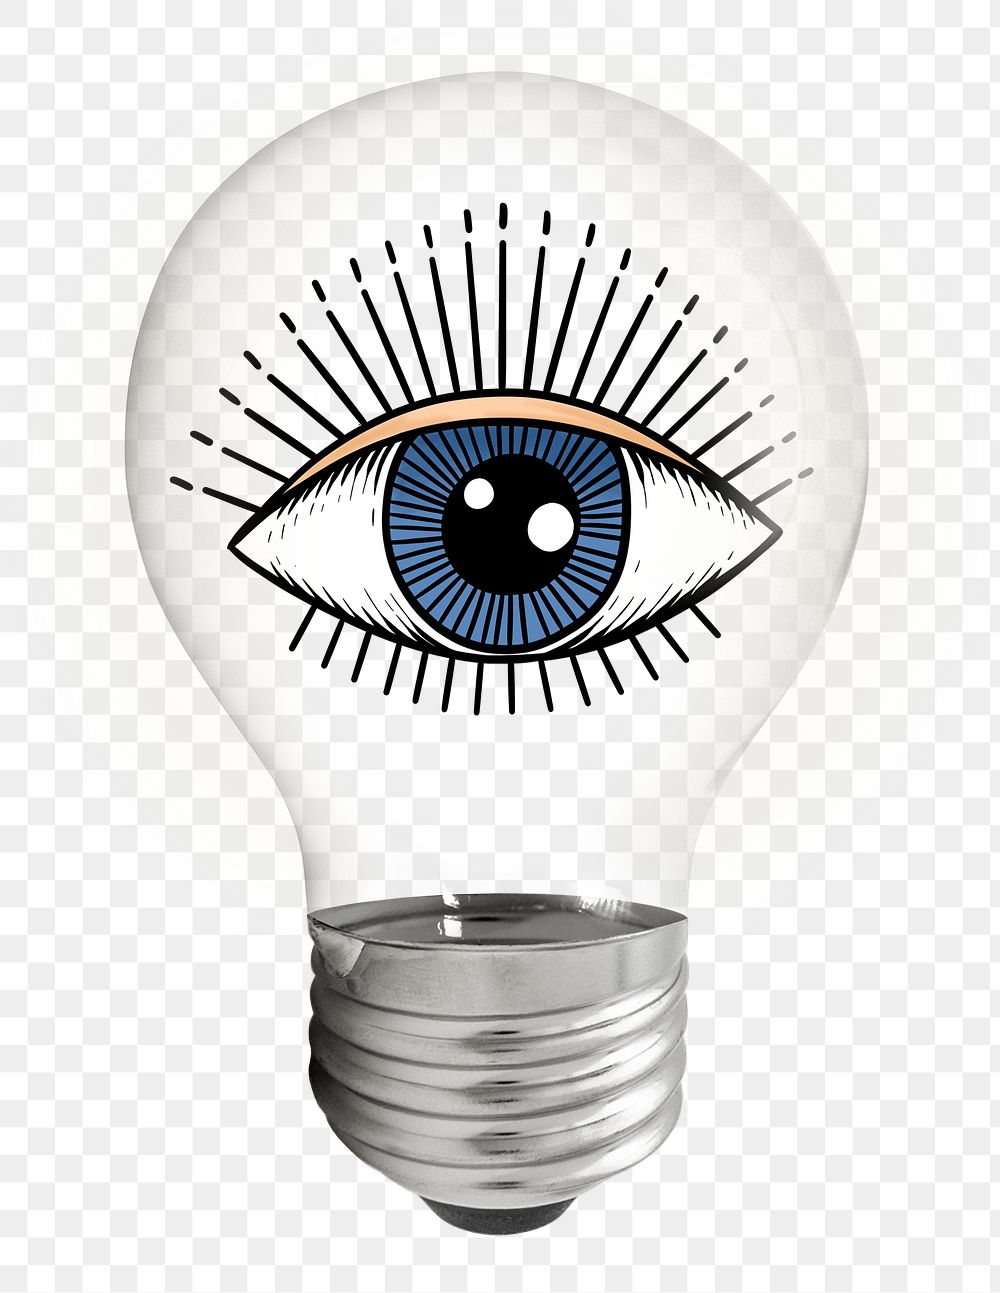 Observing eye png sticker, light bulb trippy creative remix on transparent background